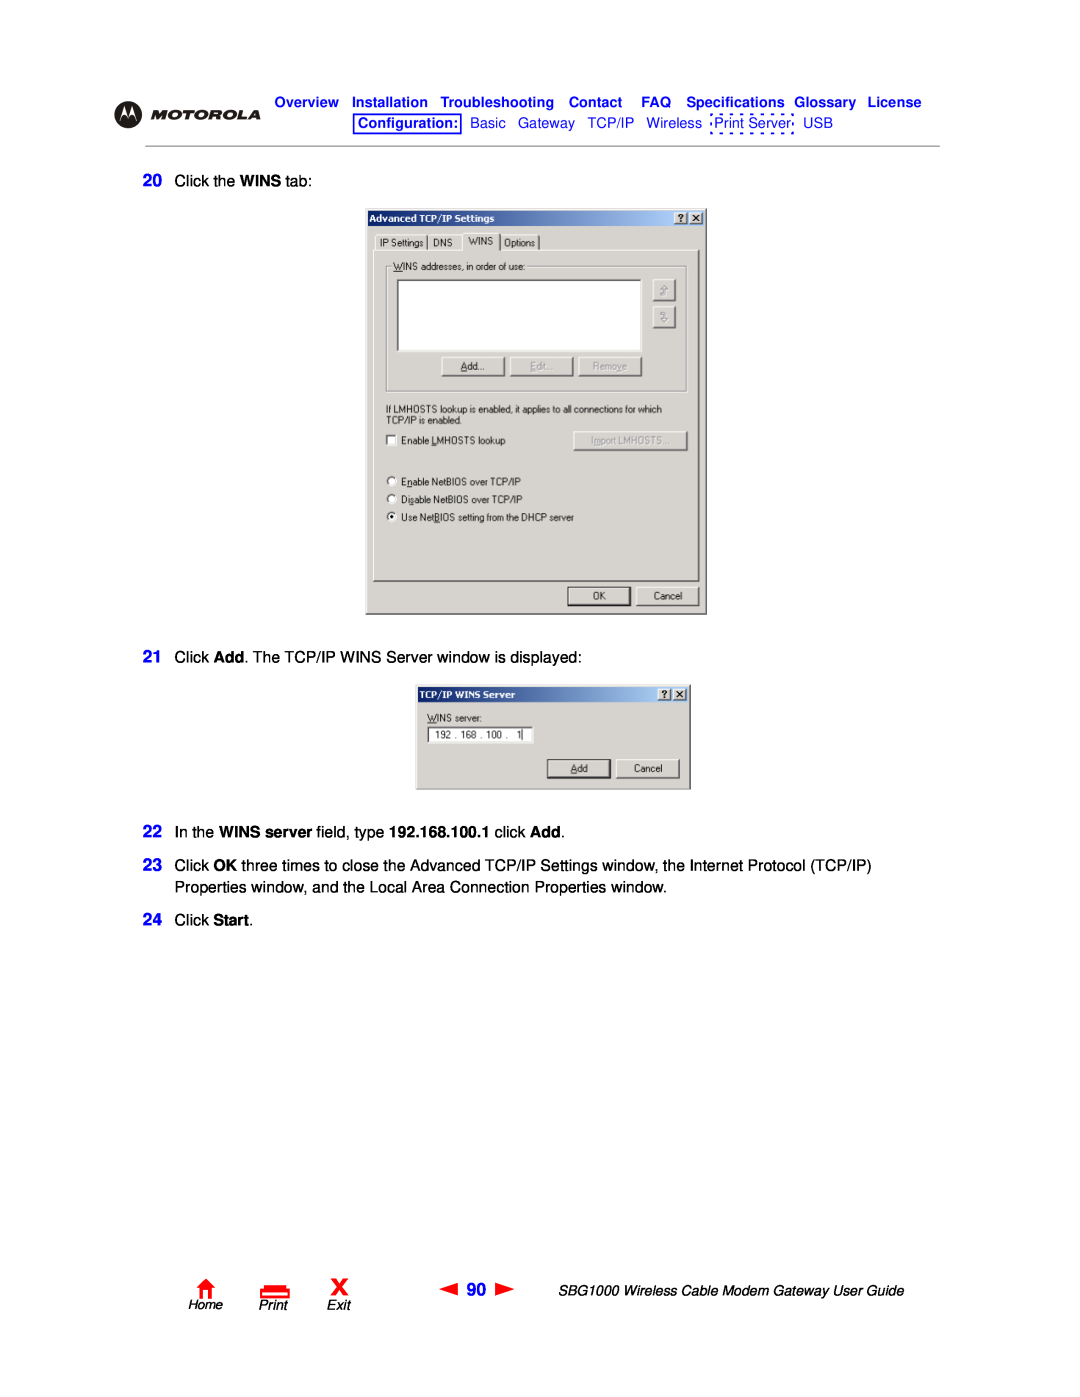 Motorola SBG1000 manual In the WINS server field, type 192.168.100.1 click Add 